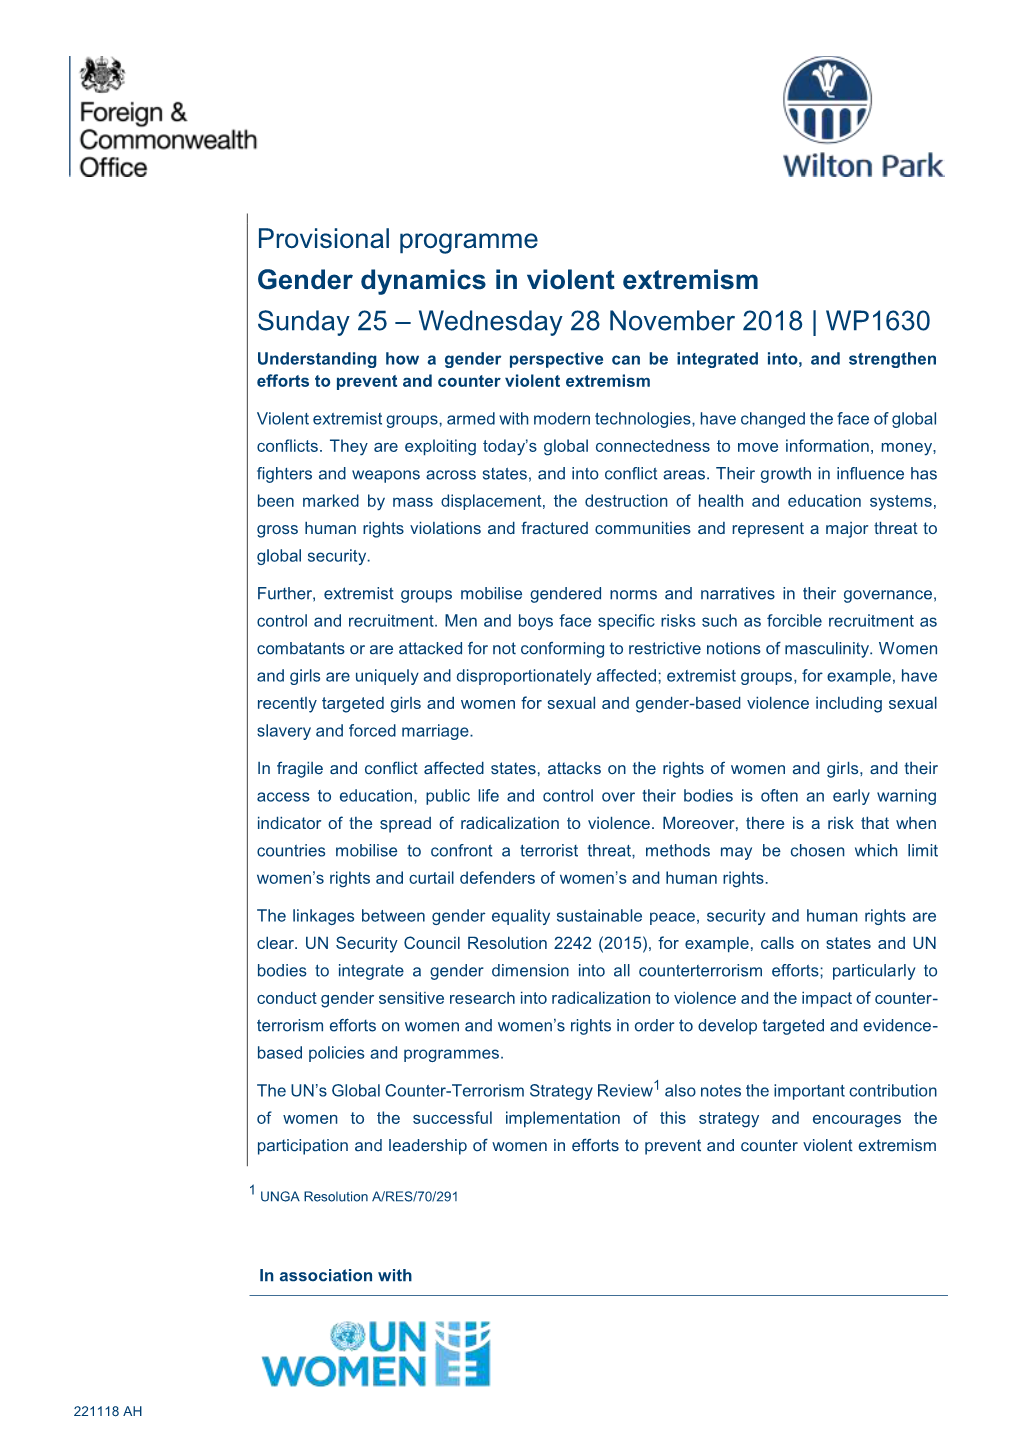 Provisional Programme Gender Dynamics in Violent Extremism Sunday 25